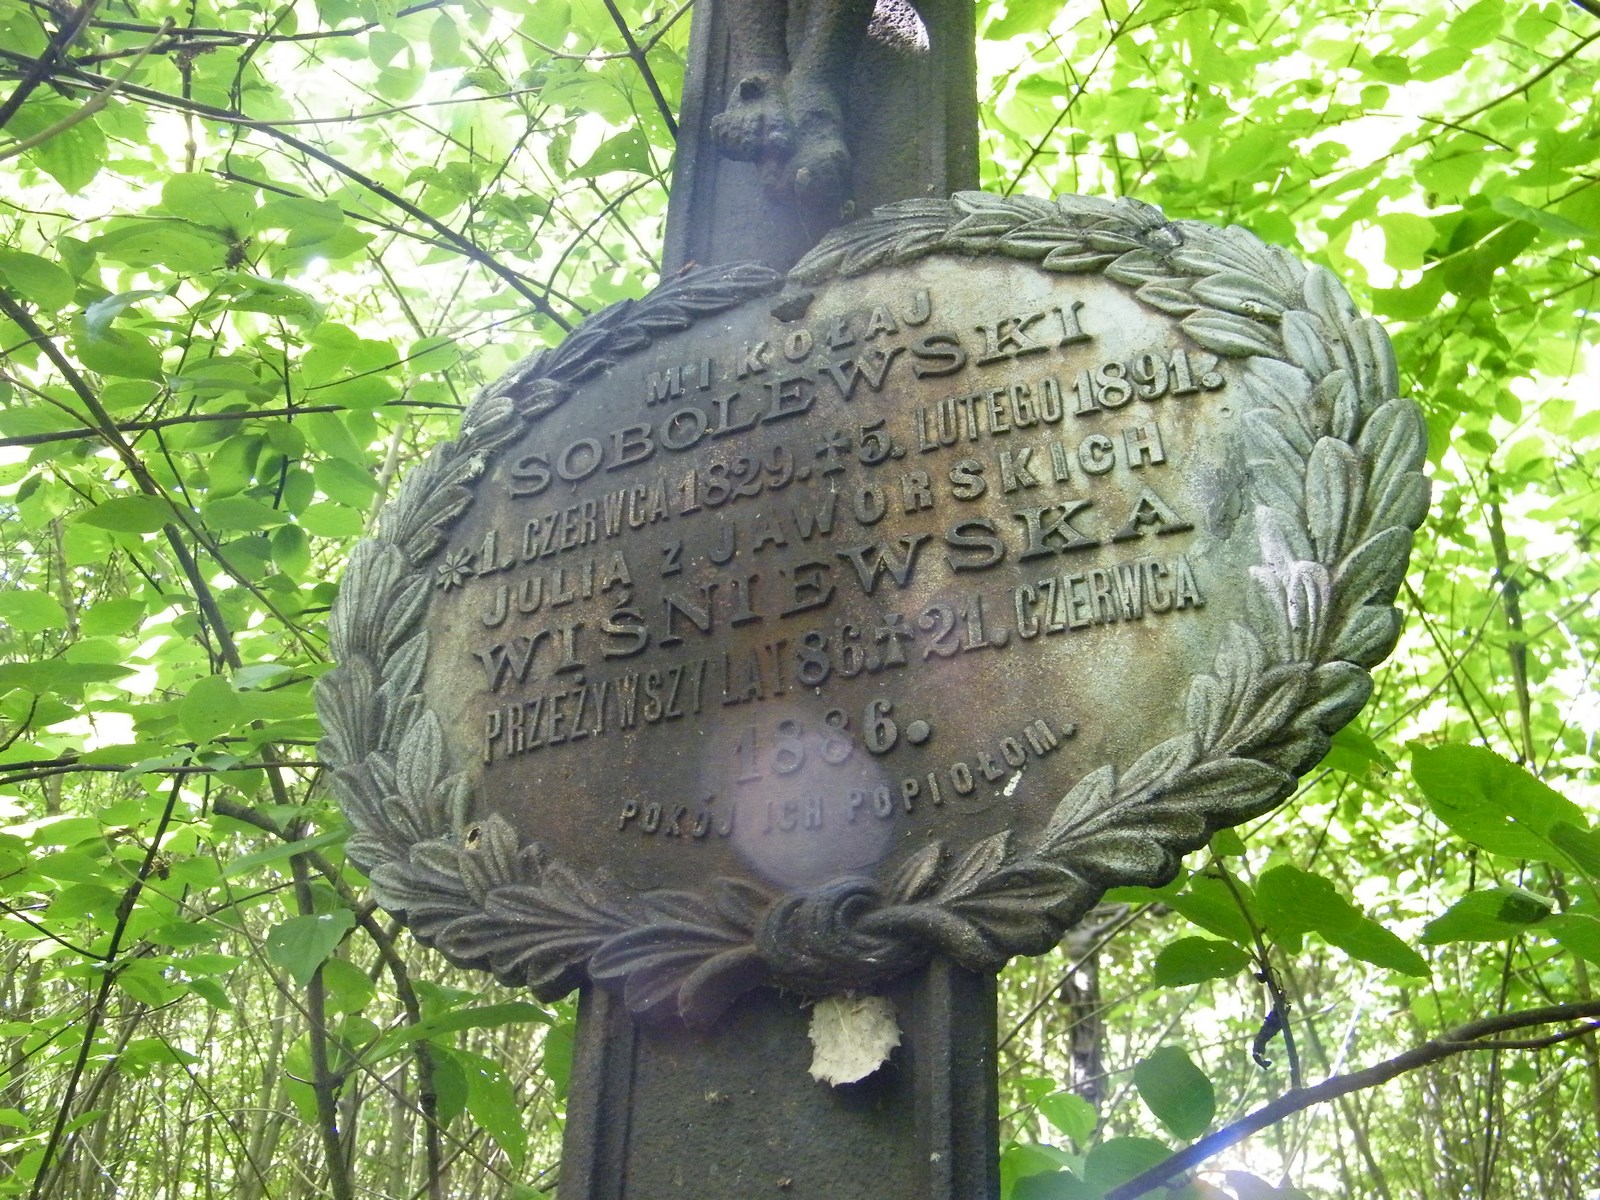 Plaque with inscription from the gravestone of Mikolaj Sobolewski and Julia Wisniewska. Cemetery in Kokutkowce